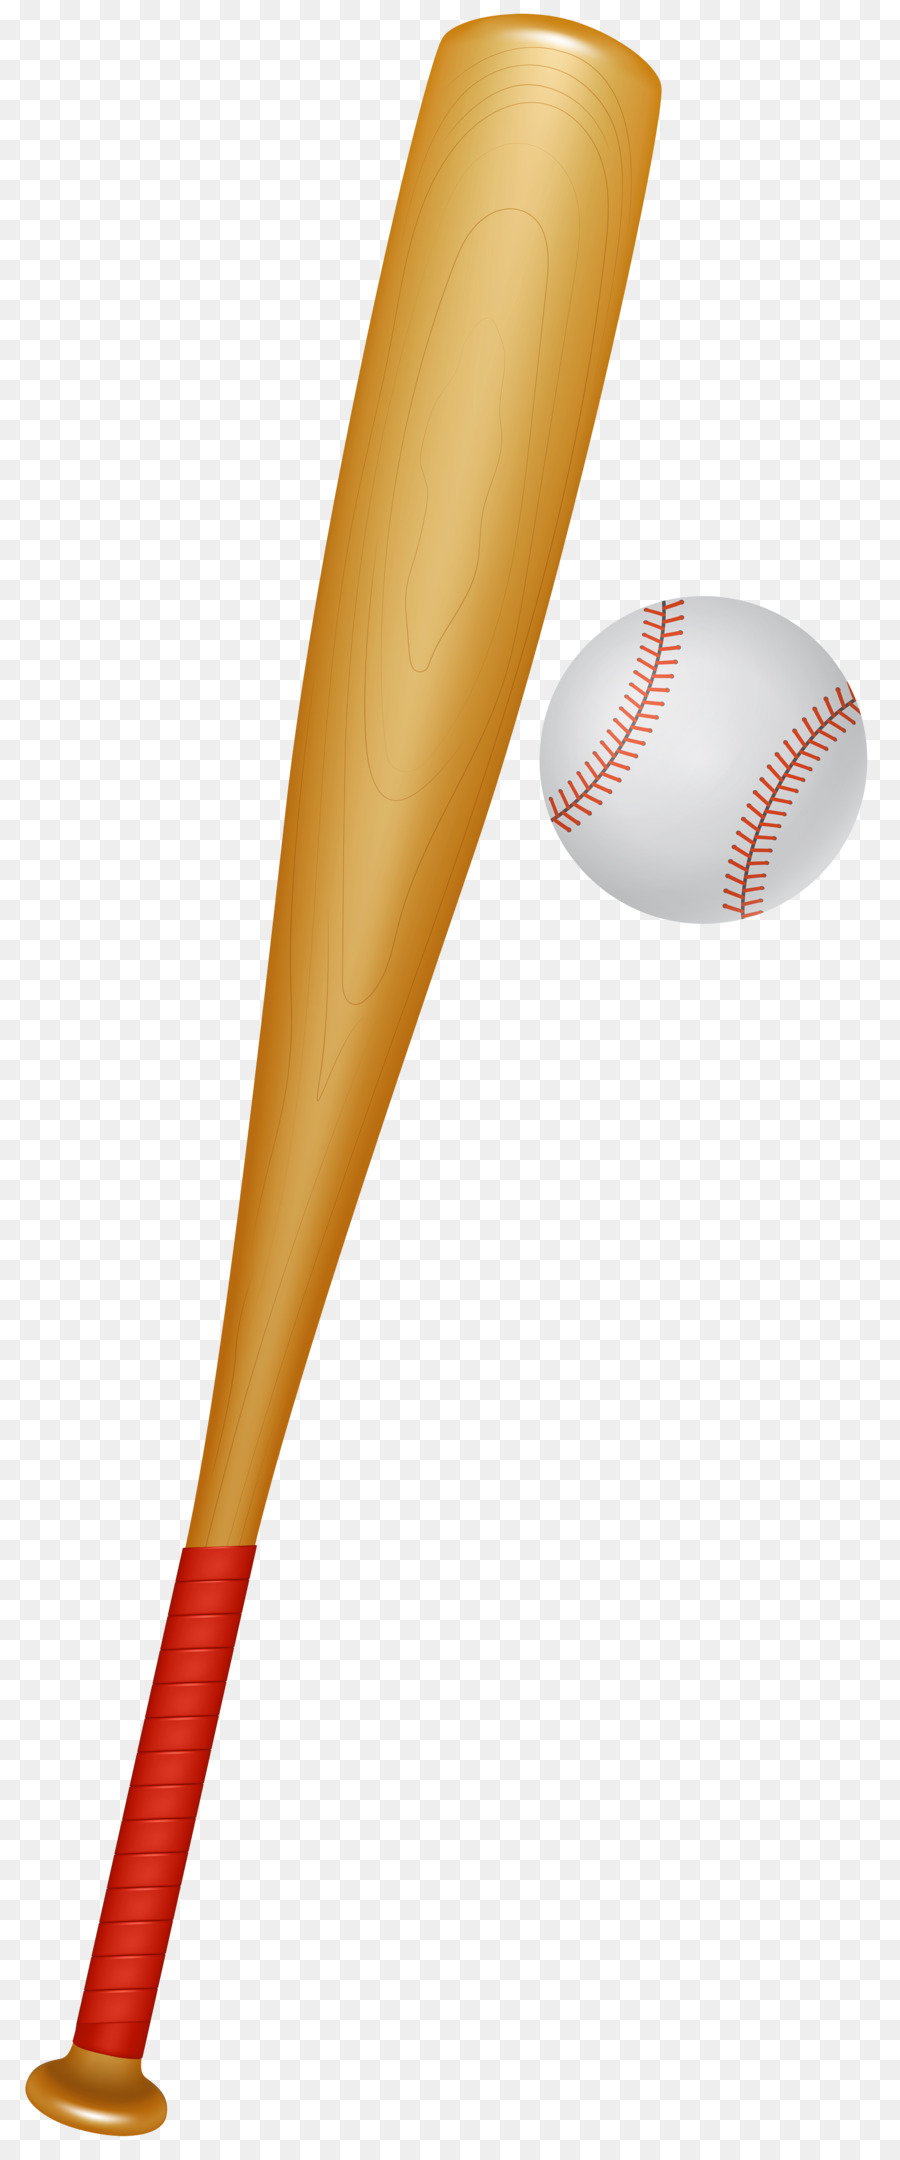 Baseballschläger Clip-art-Portable-Network-Graphics-Ball-Spiel - Baseball